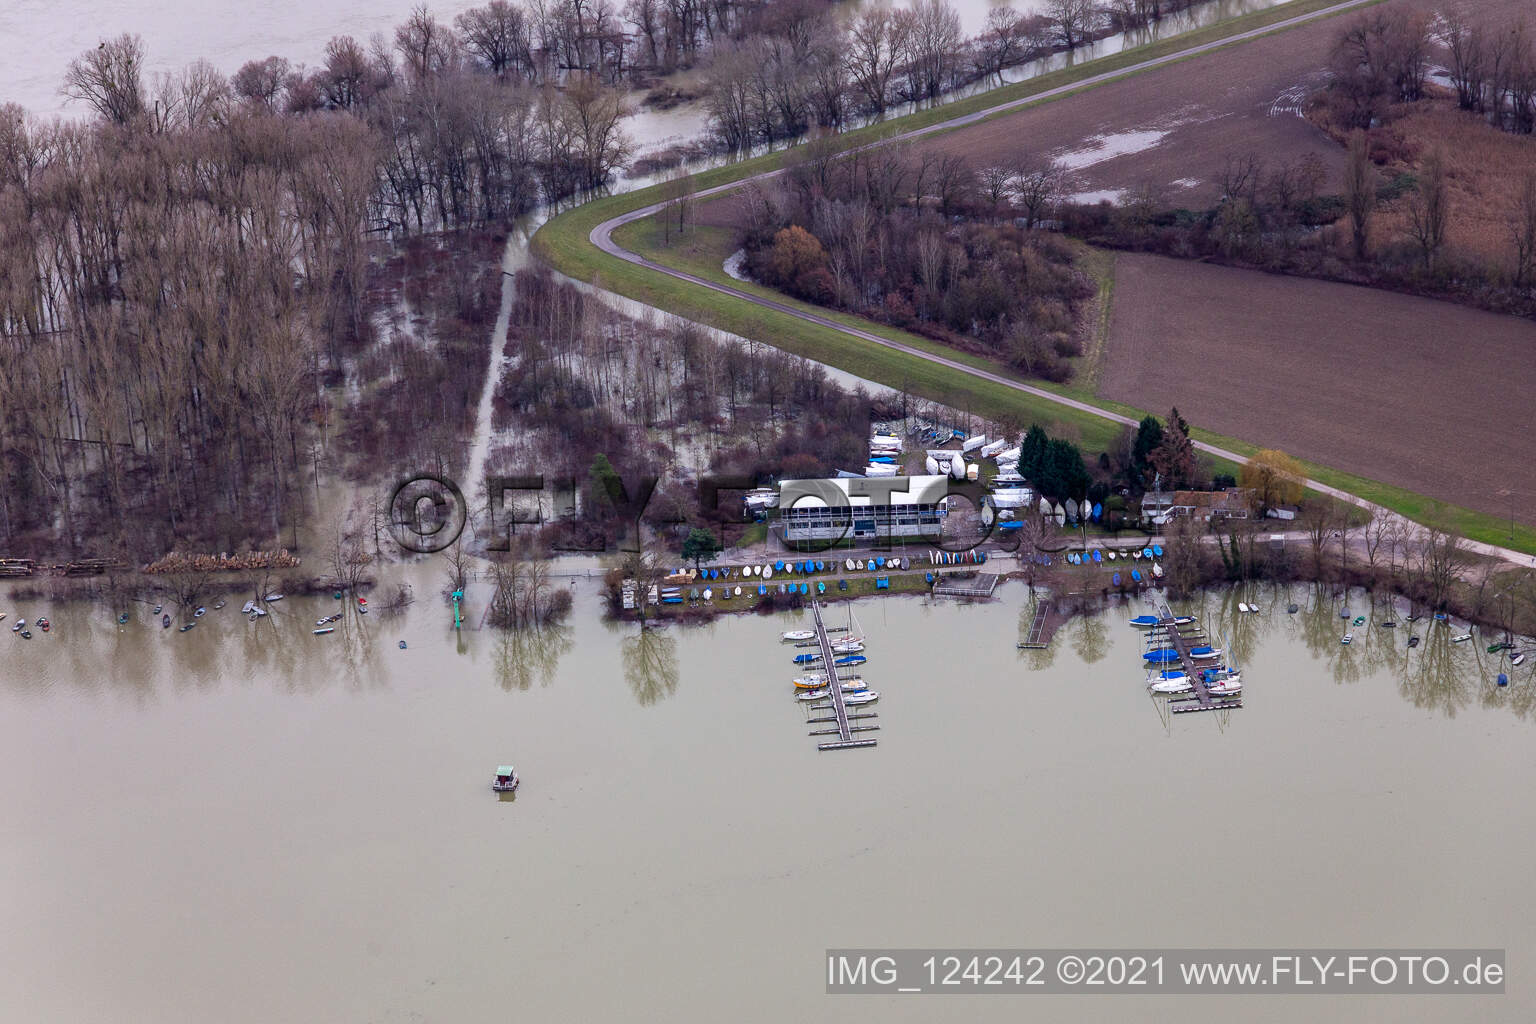 Sailing club RKC Wörth during flooding in the district Maximiliansau in Wörth am Rhein in the state Rhineland-Palatinate, Germany